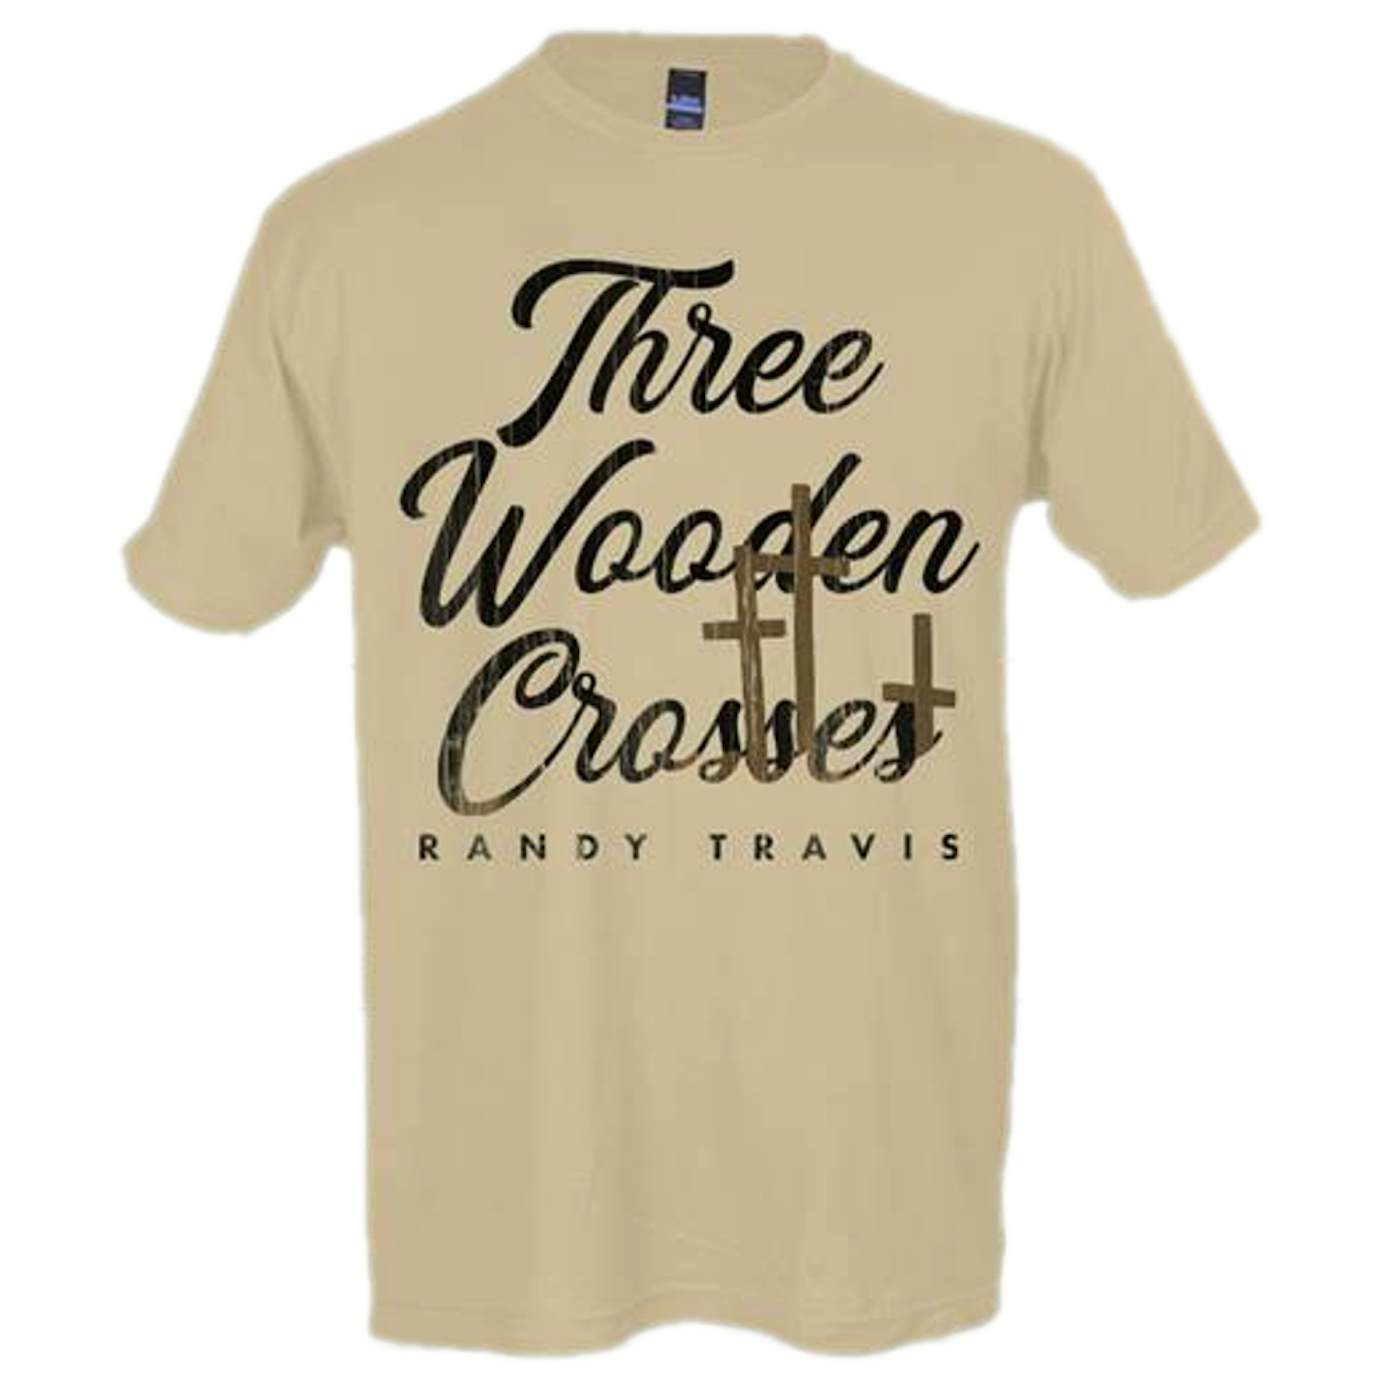 Randy Travis Tan Three Wooden Crosses Tee